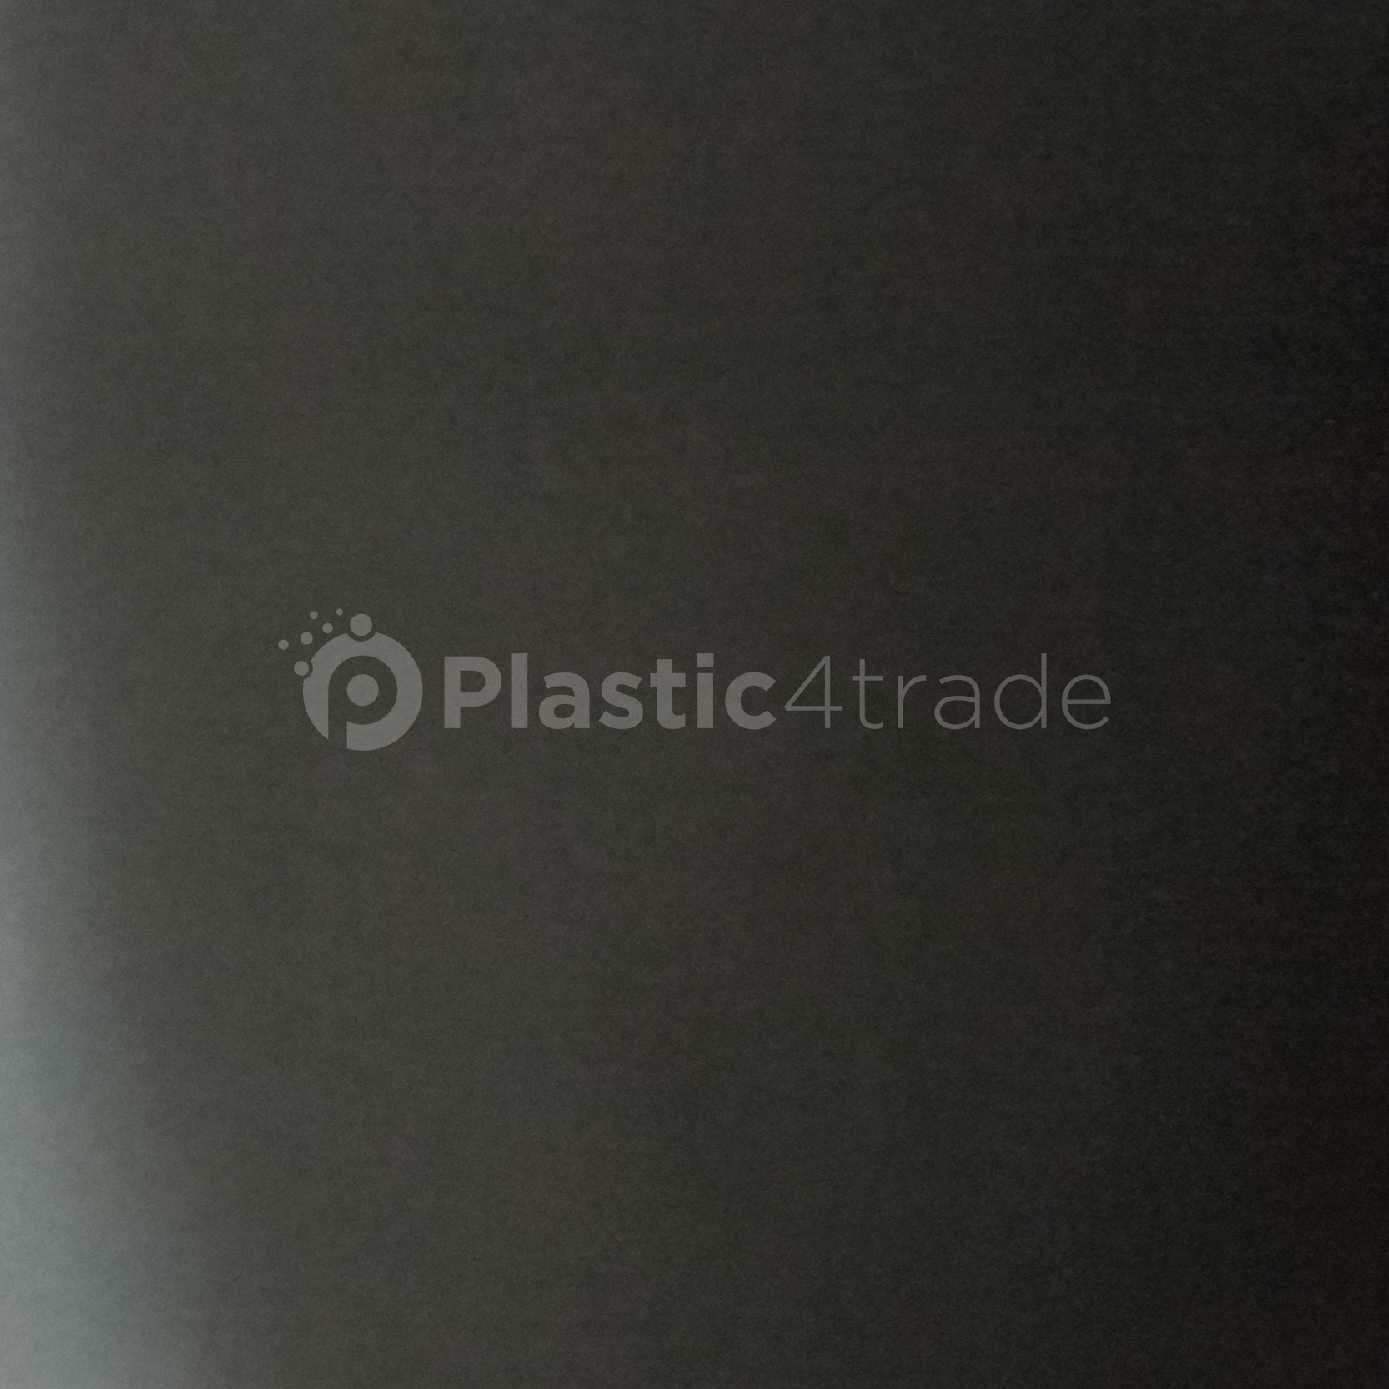 HDP, PP, LDP, PET SCARP Plastic Waste Mix Material Mix Scrap gujarat india Plastic4trade